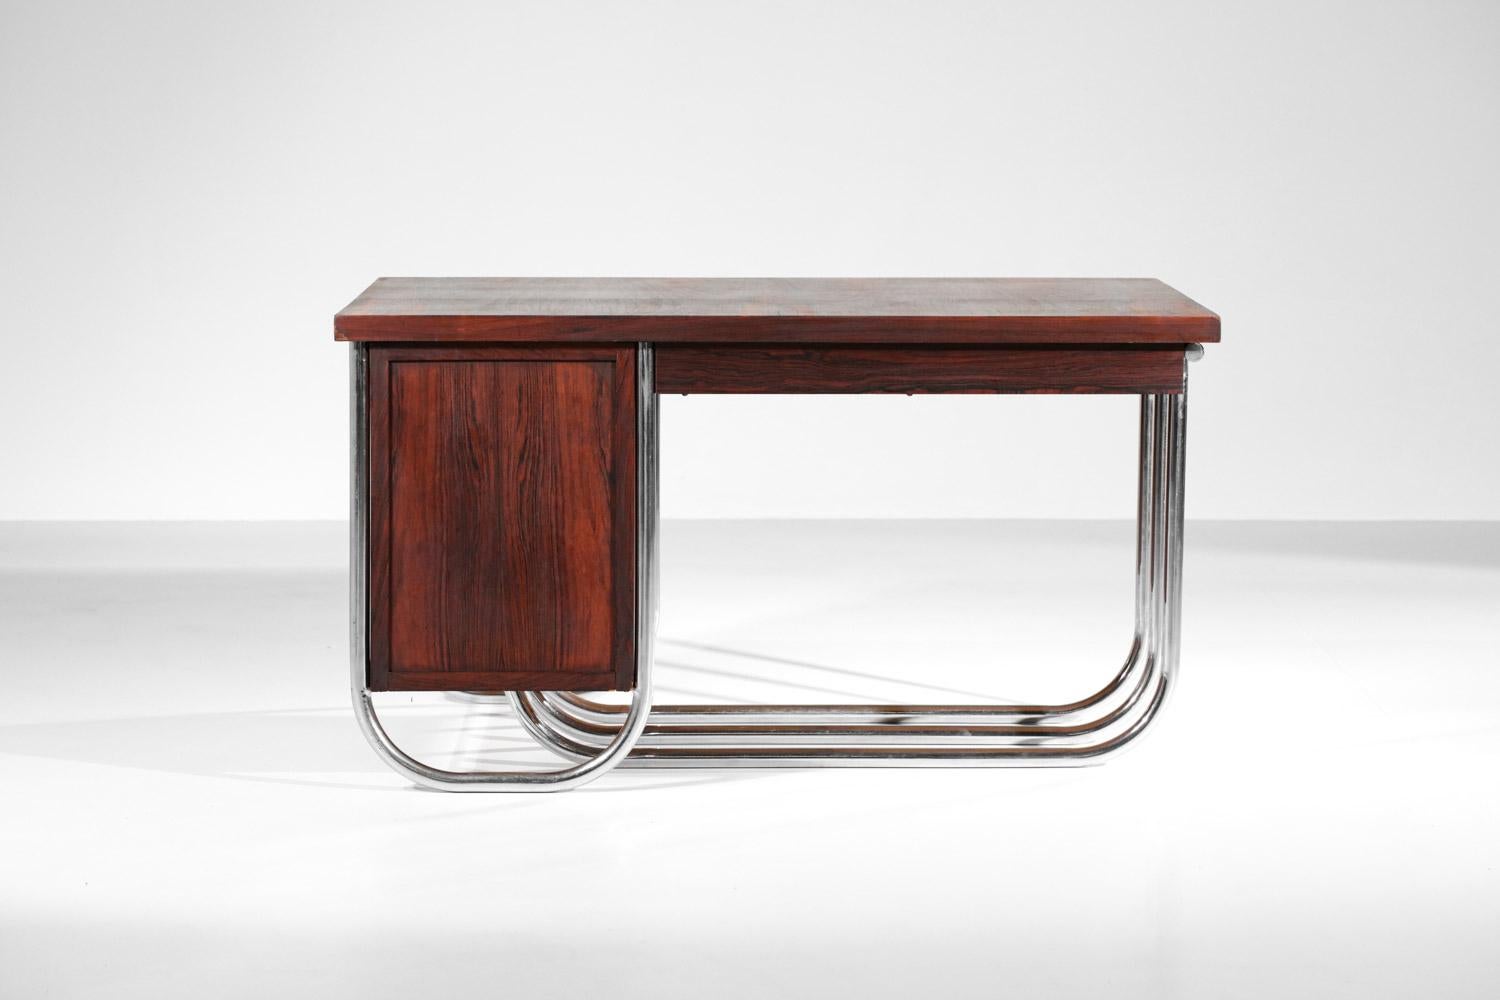 Modernist Desk in Solid Wood 40s / 50s Bauhaus Style Vintage For Sale 10